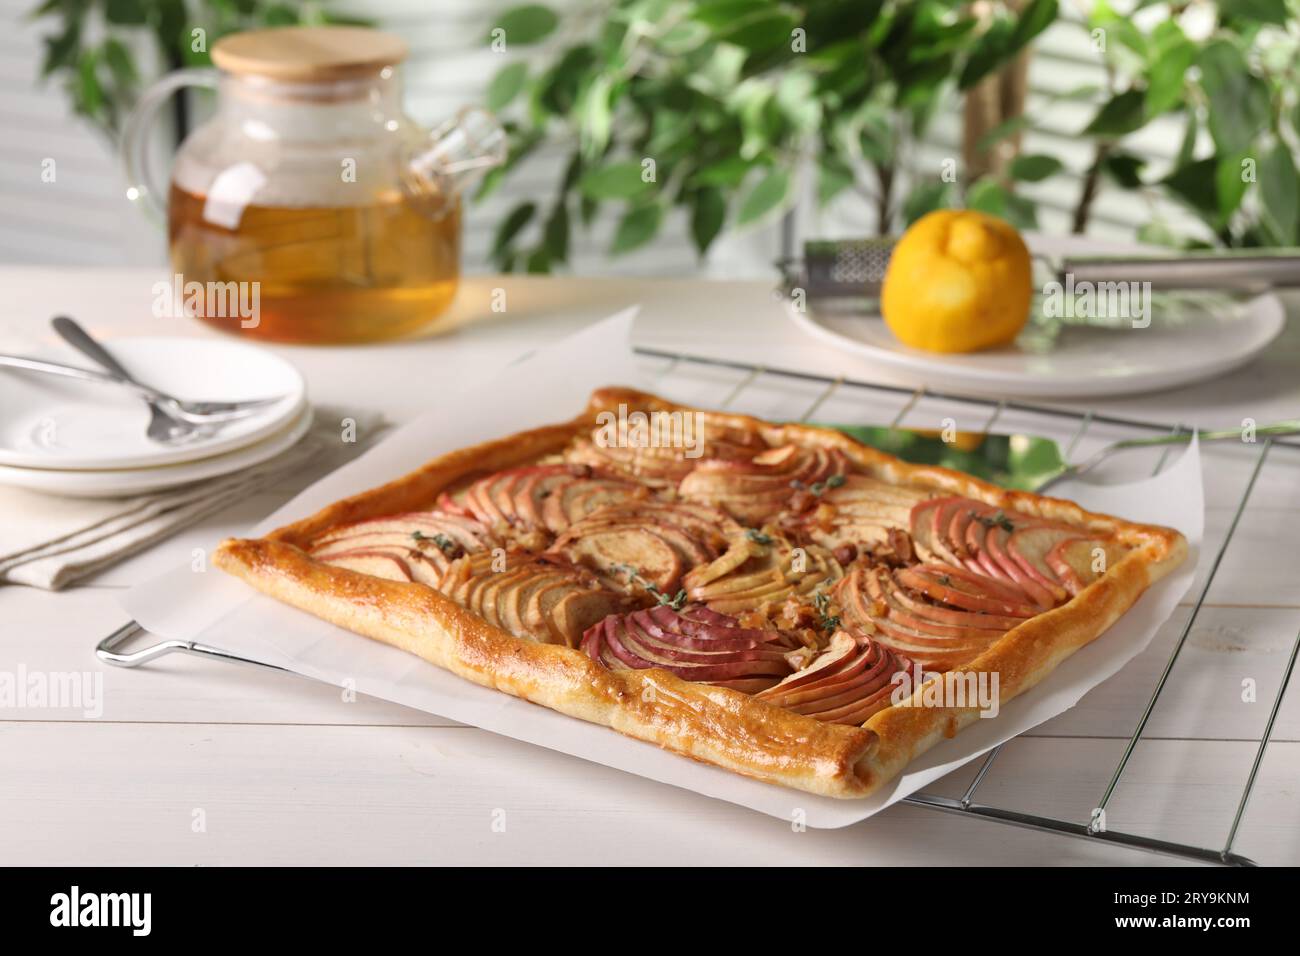 Freshly baked apple pie on white wooden table Stock Photo